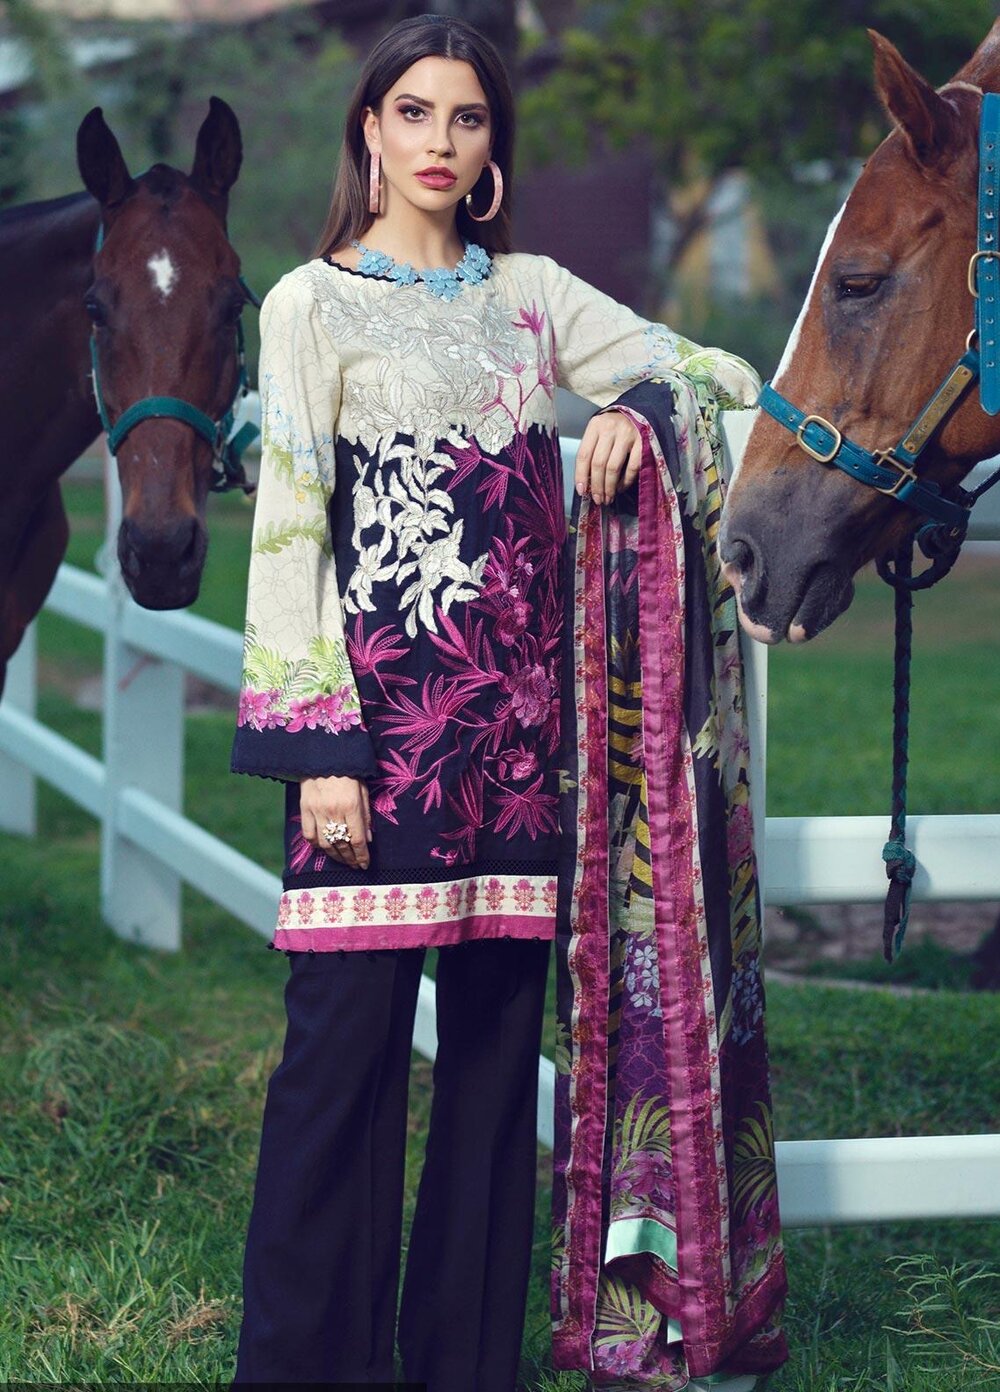 Designer Salwar Kameez Designer Punjab Suits Pakistani Salwar